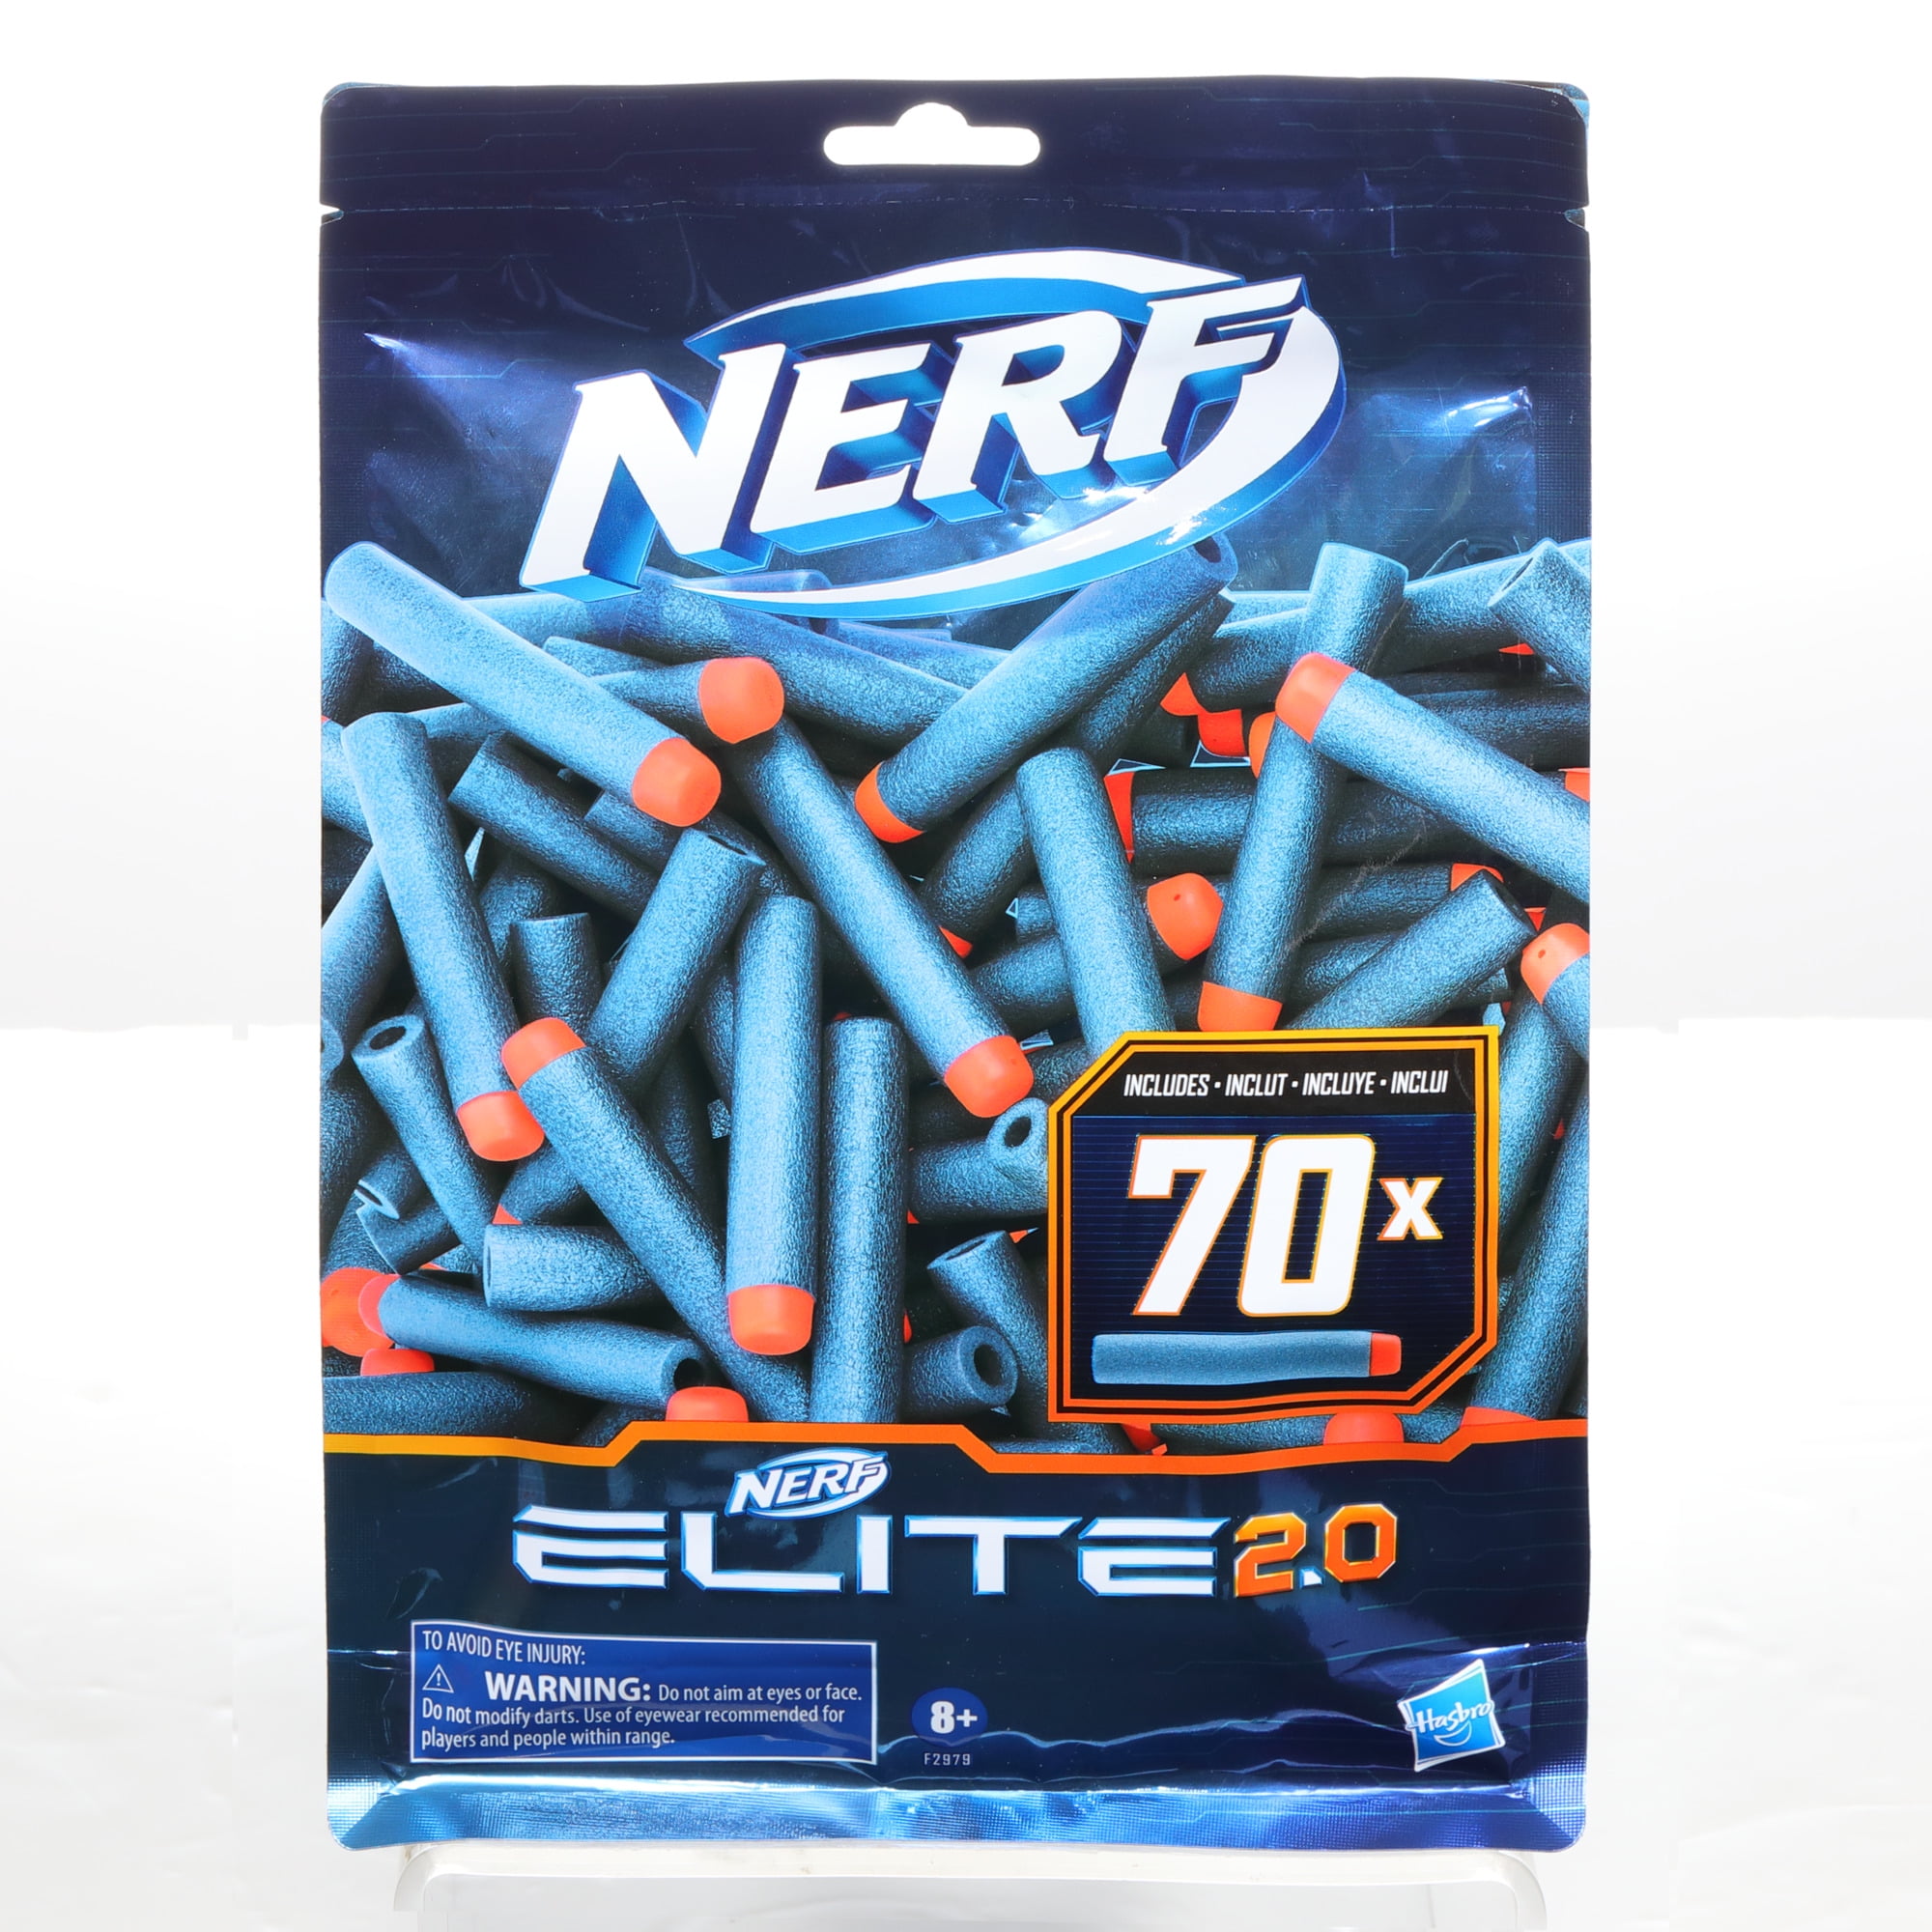 24 Darts Genuine Nerf N-Strike Elite Darts 2 Refill Packs Hasbro Free Shipping 